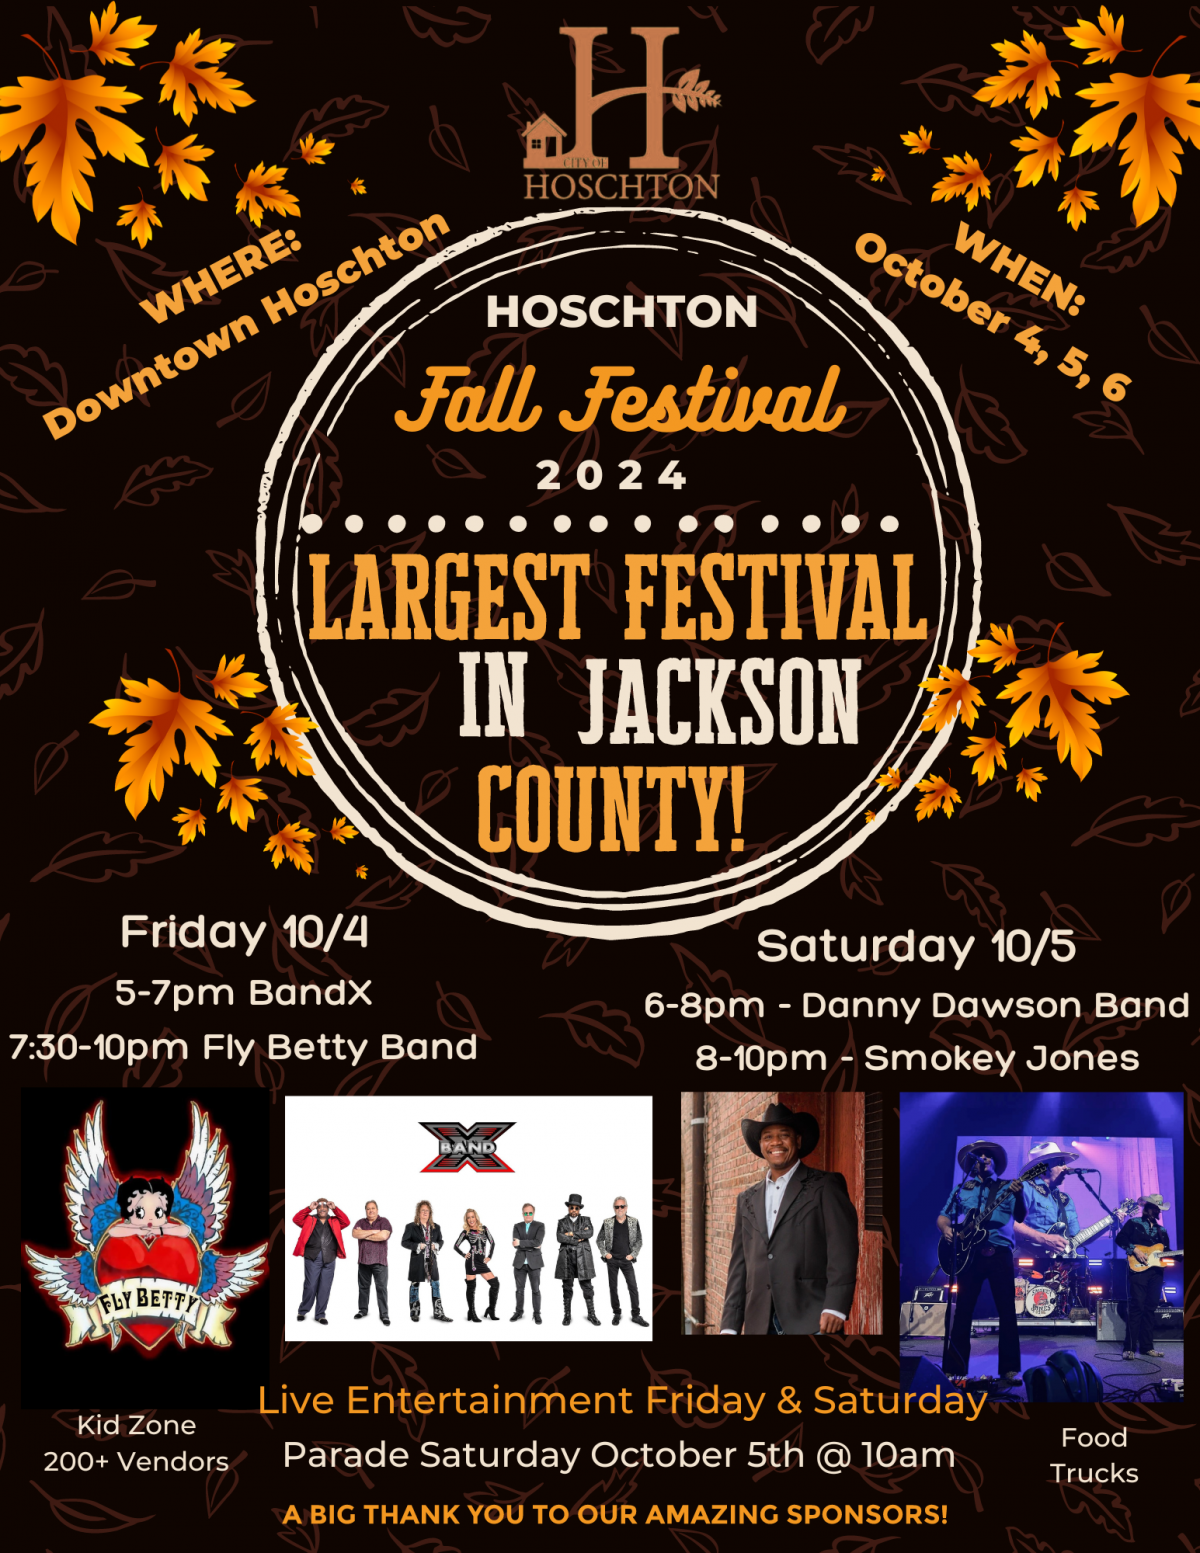 Fall Festival Oct 4-6